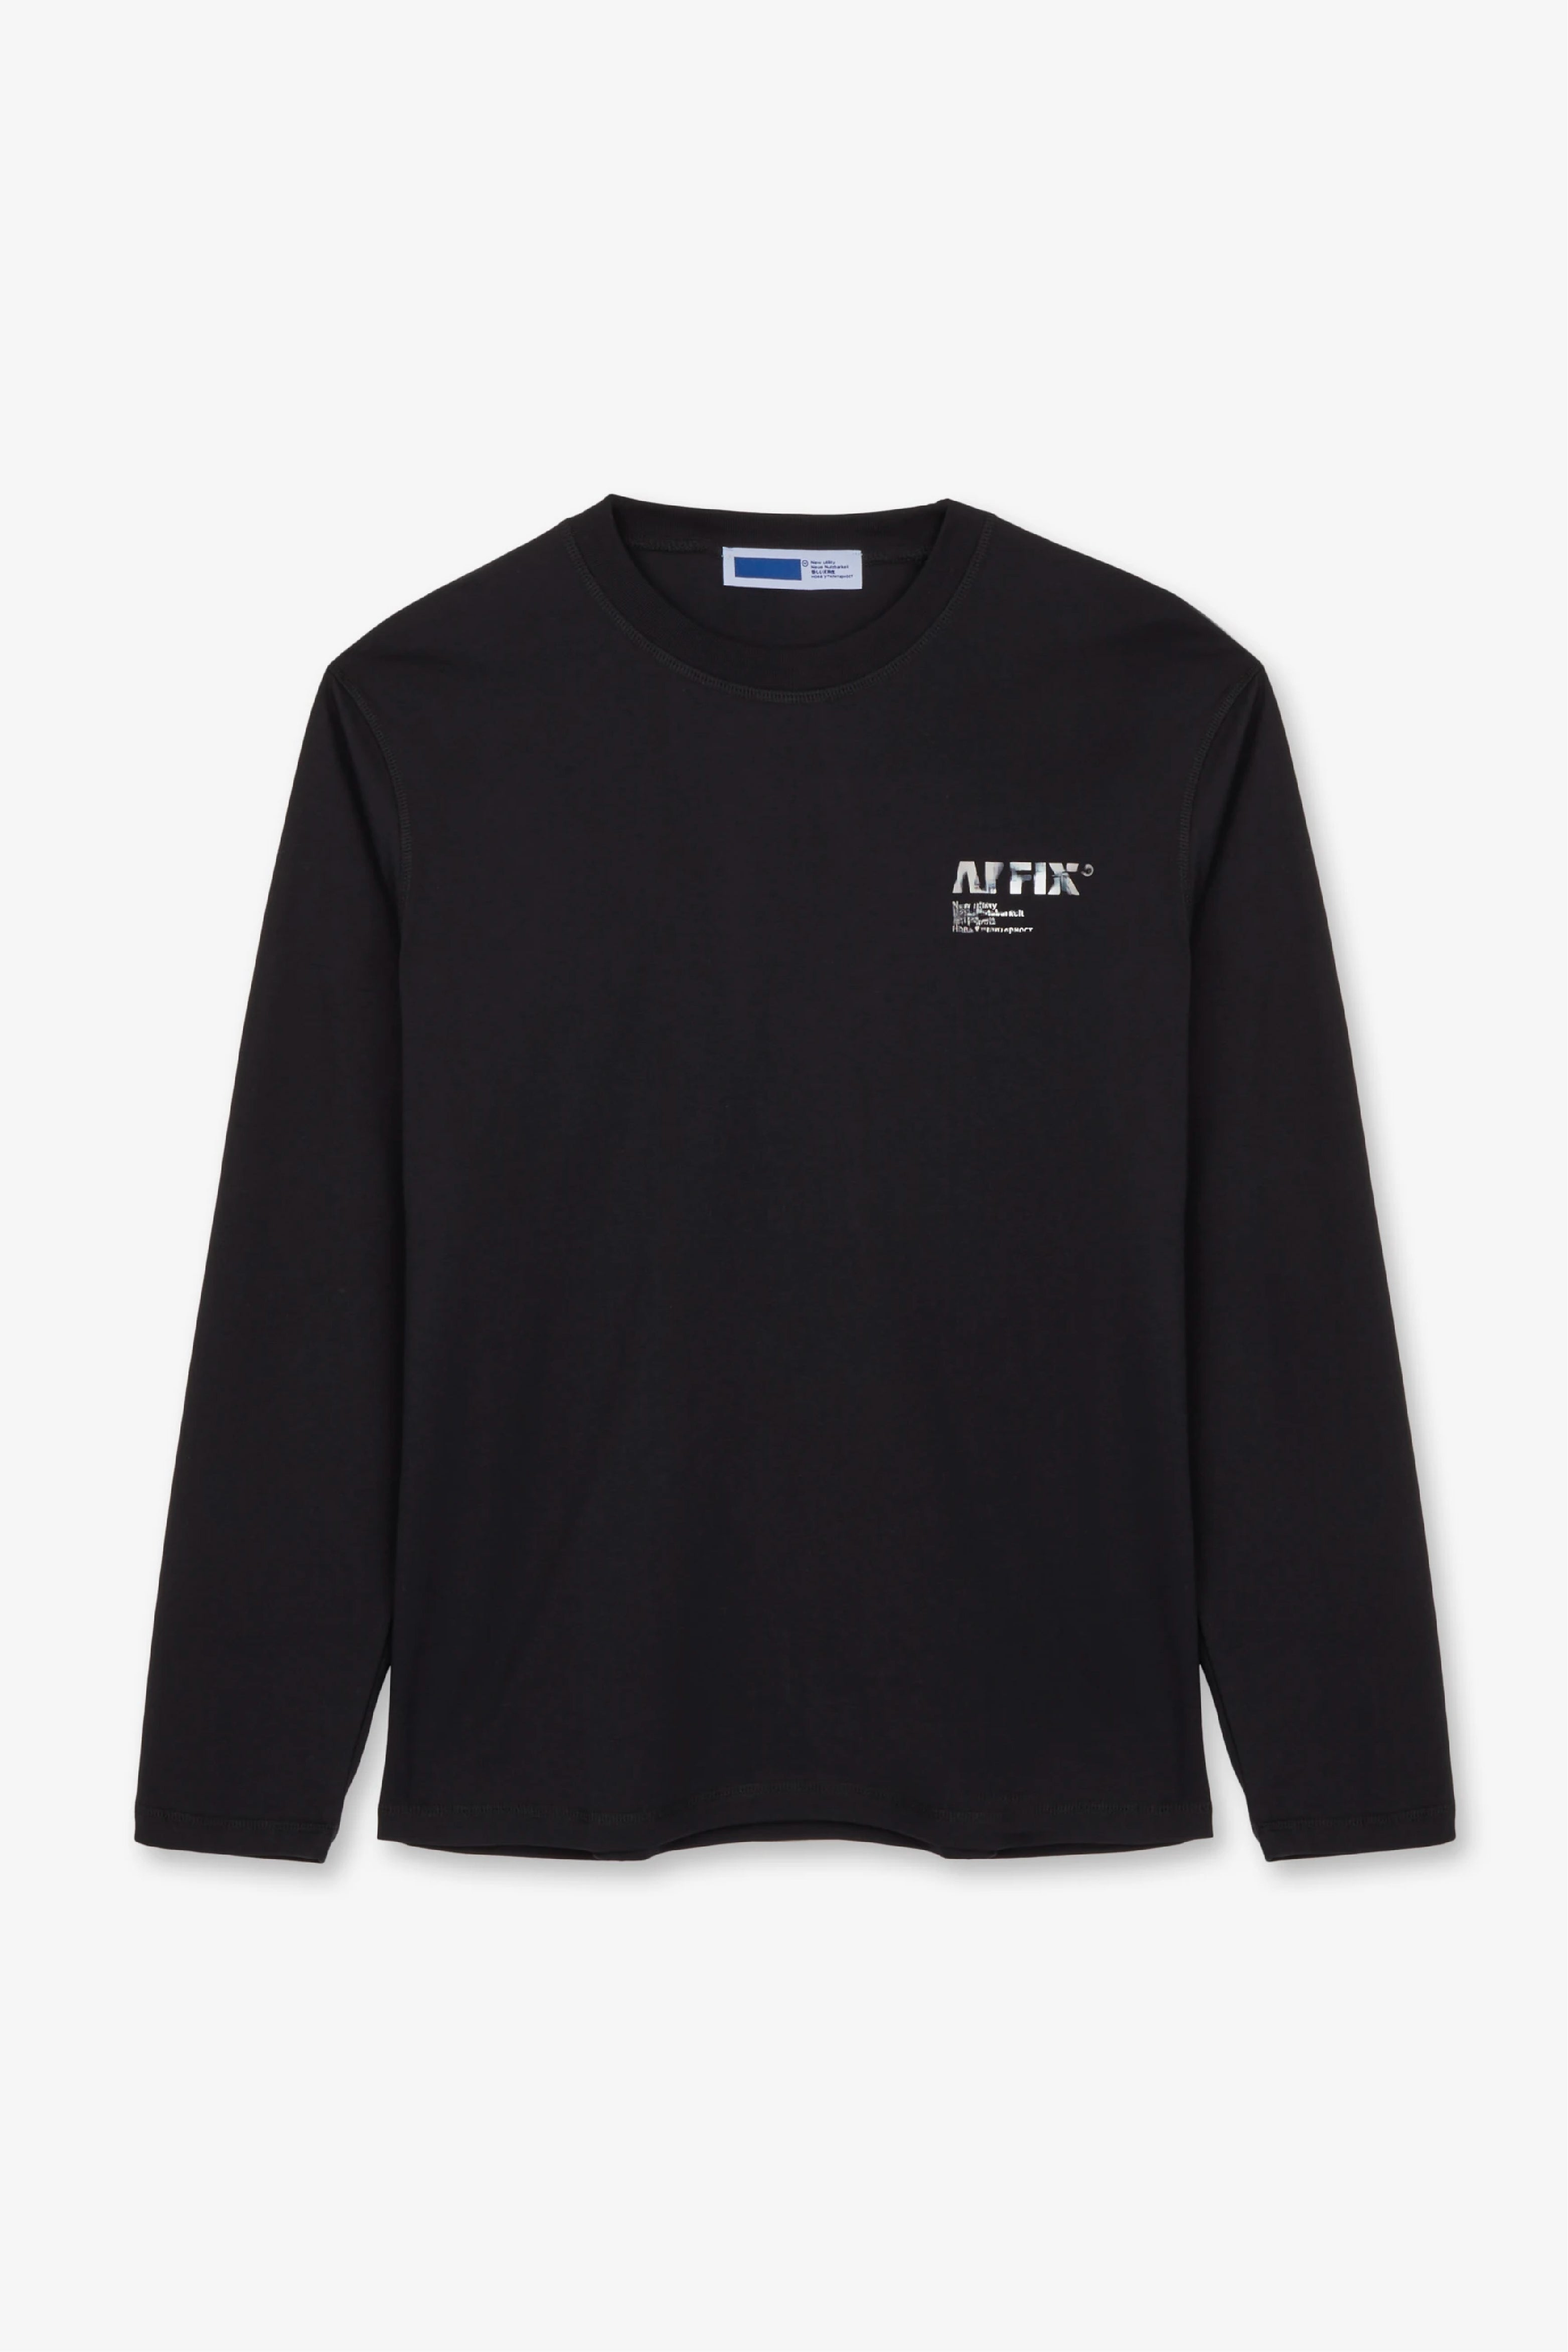 Selectshop FRAME - AFFIX AI Standardised Logo Long Sleeve Tee T-Shirts Dubai